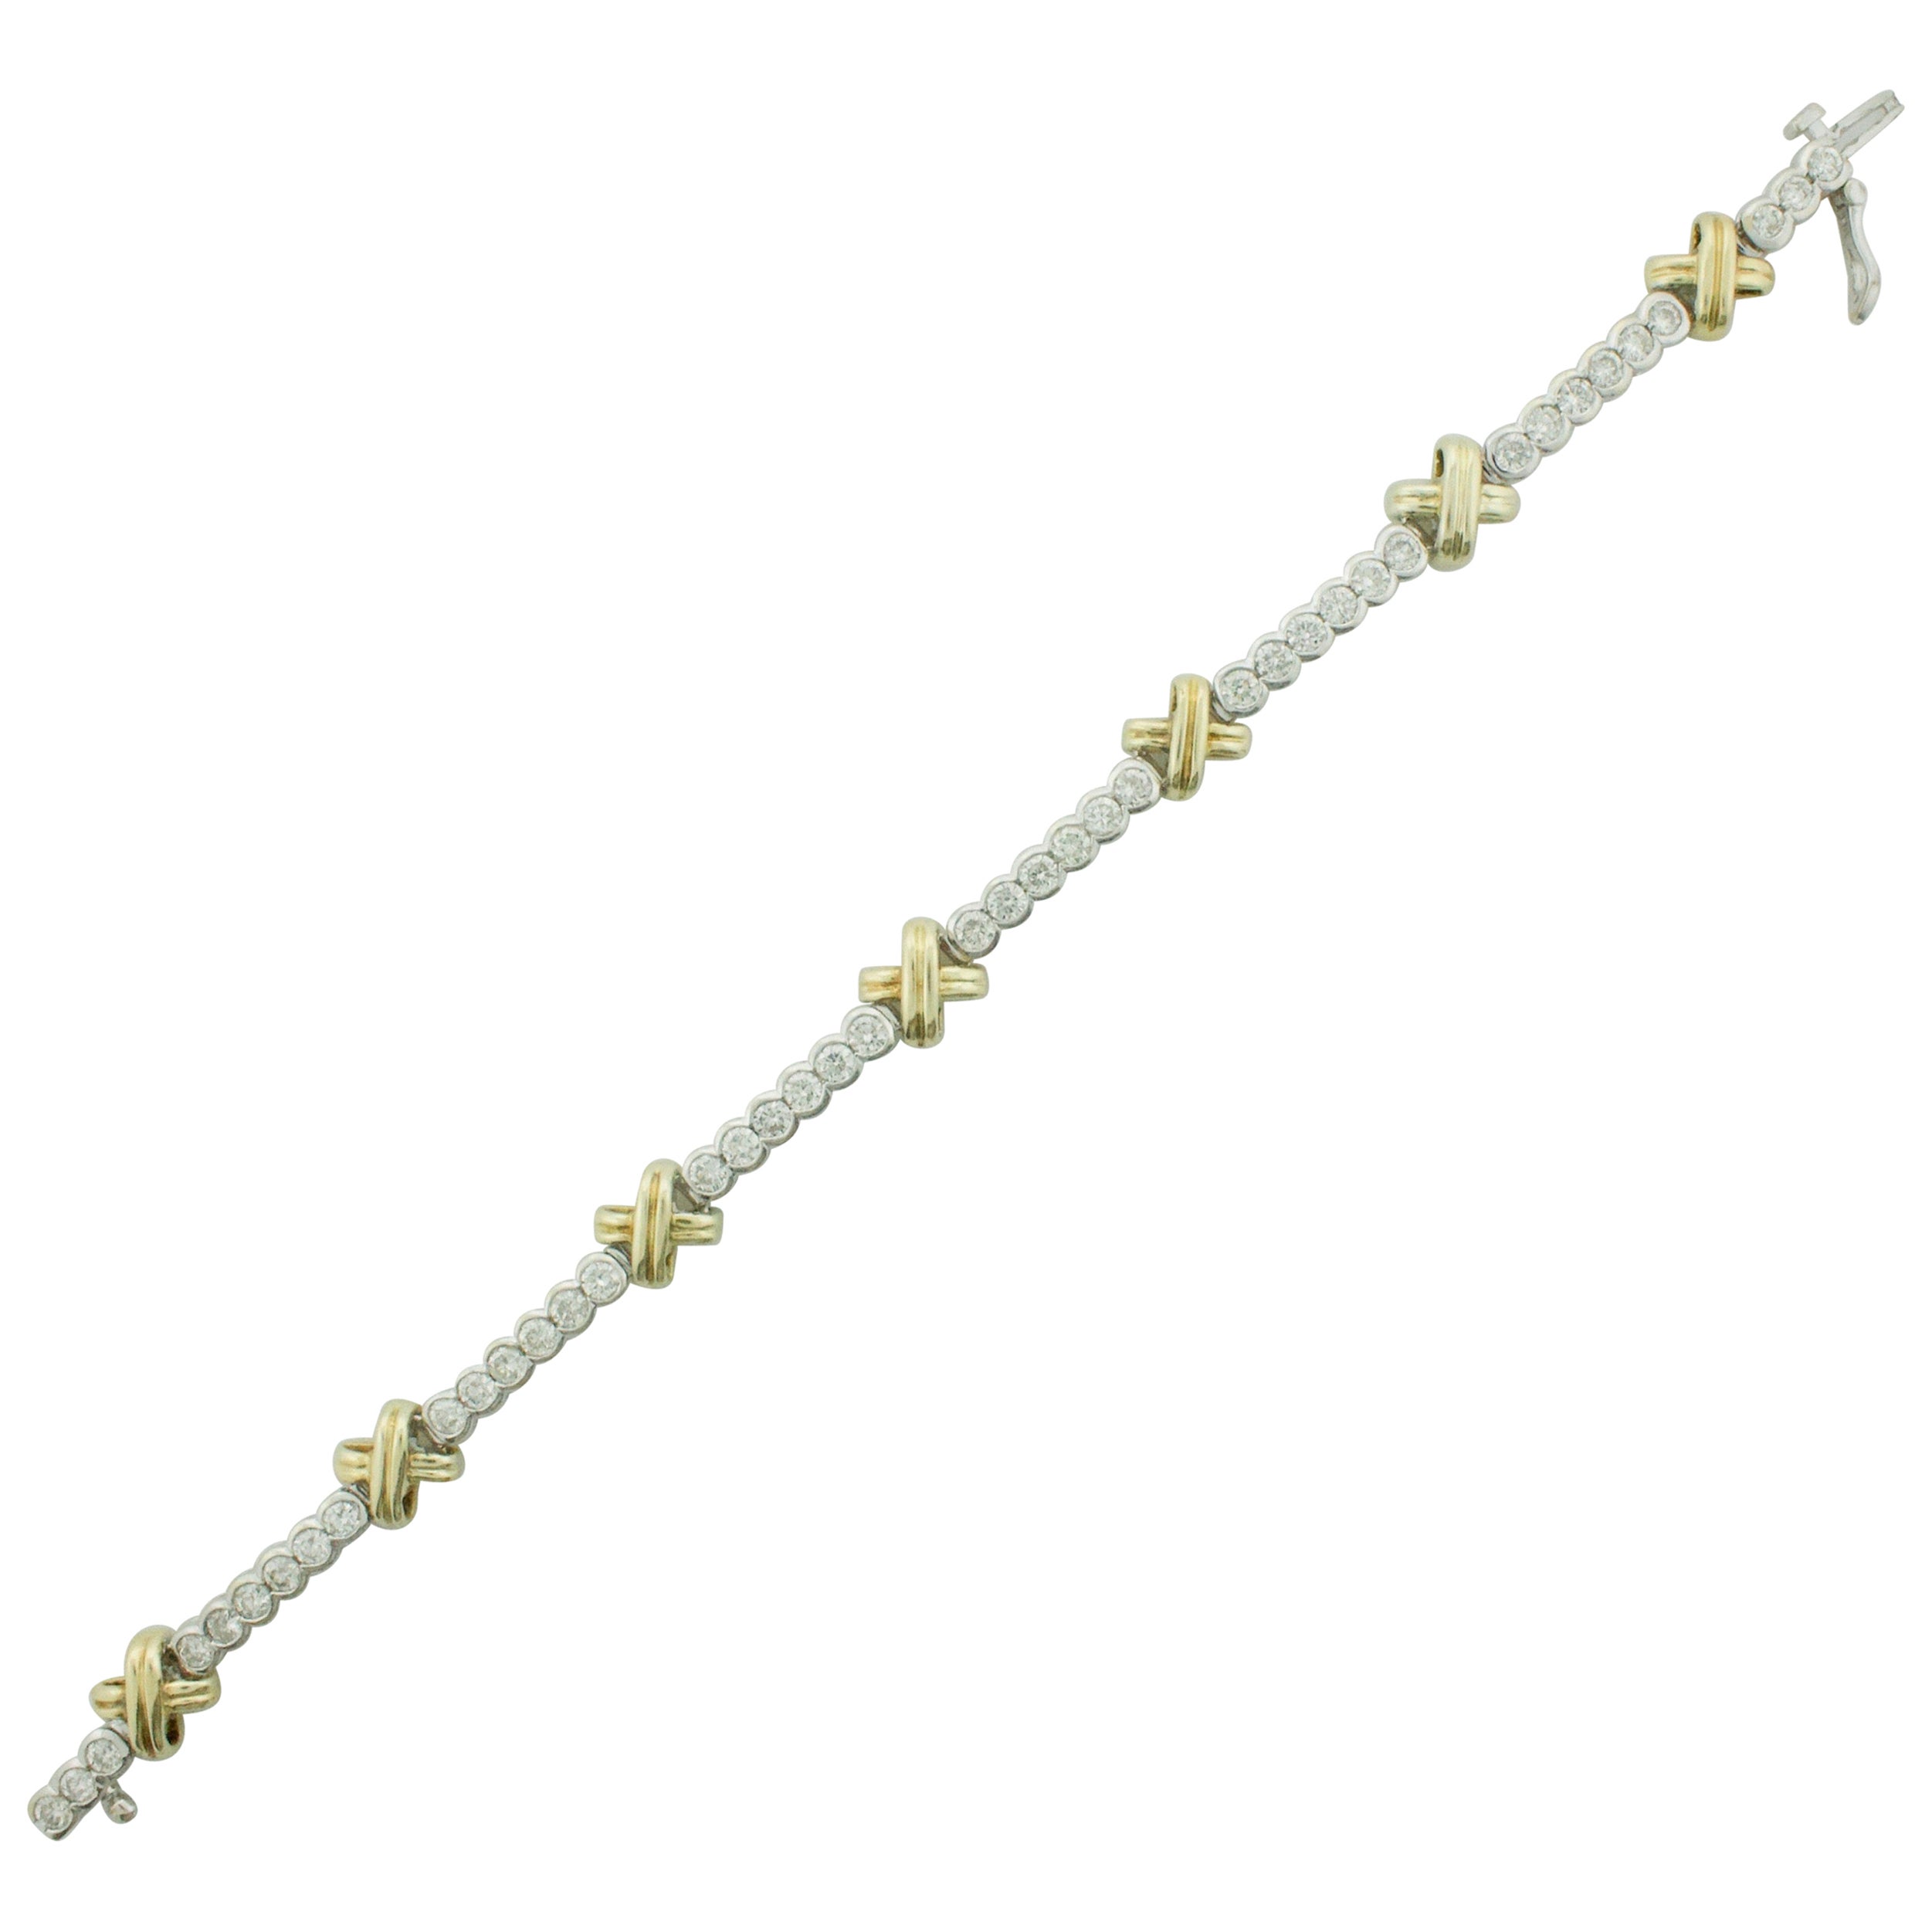 Yellow and White Gold Diamond "X" Tennis Bracelet 3.75 Carats 